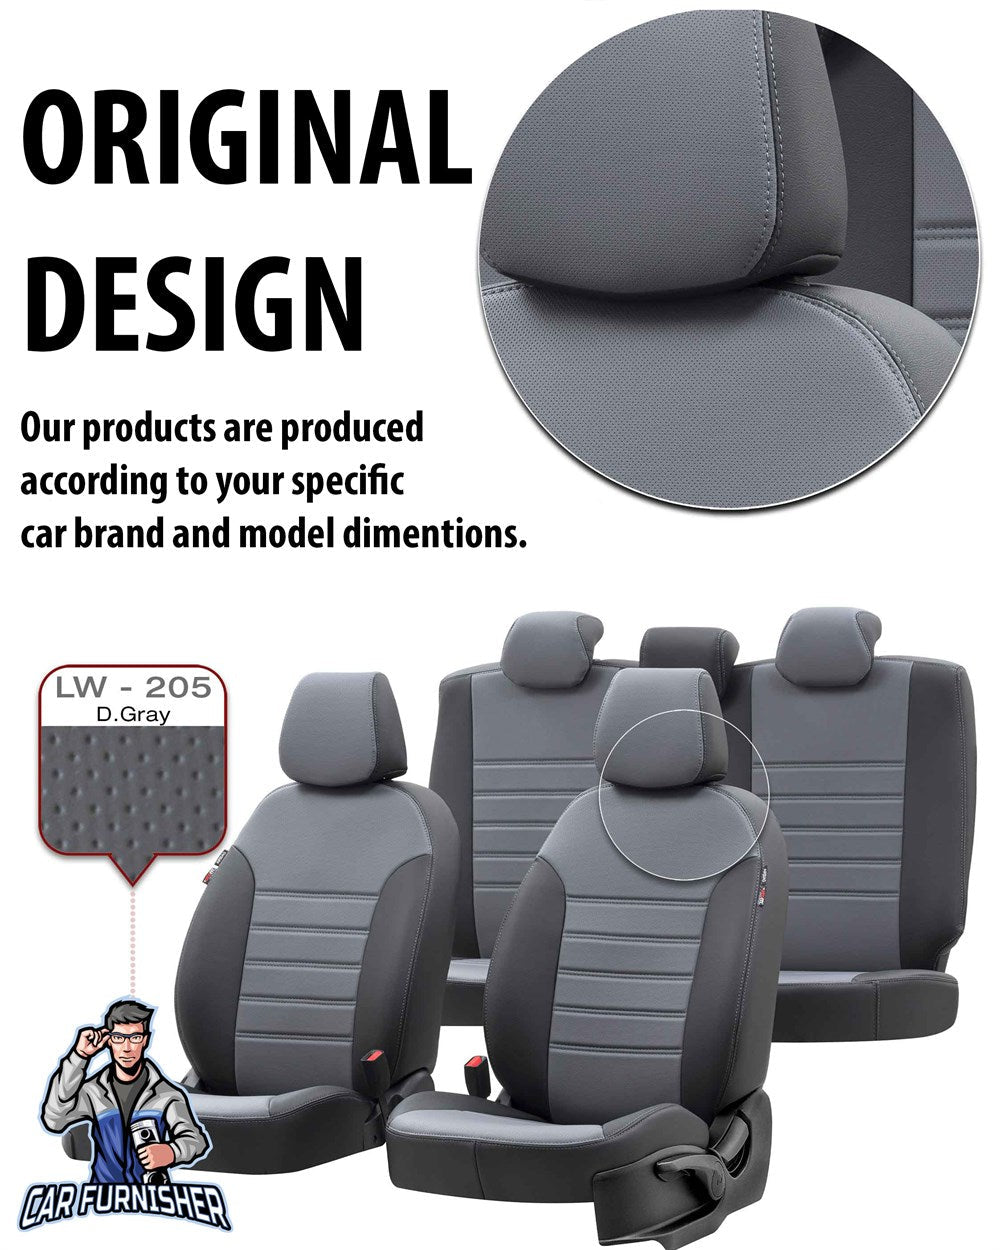 Skoda Citigo Seat Covers Istanbul Leather Design Smoked Black Leather